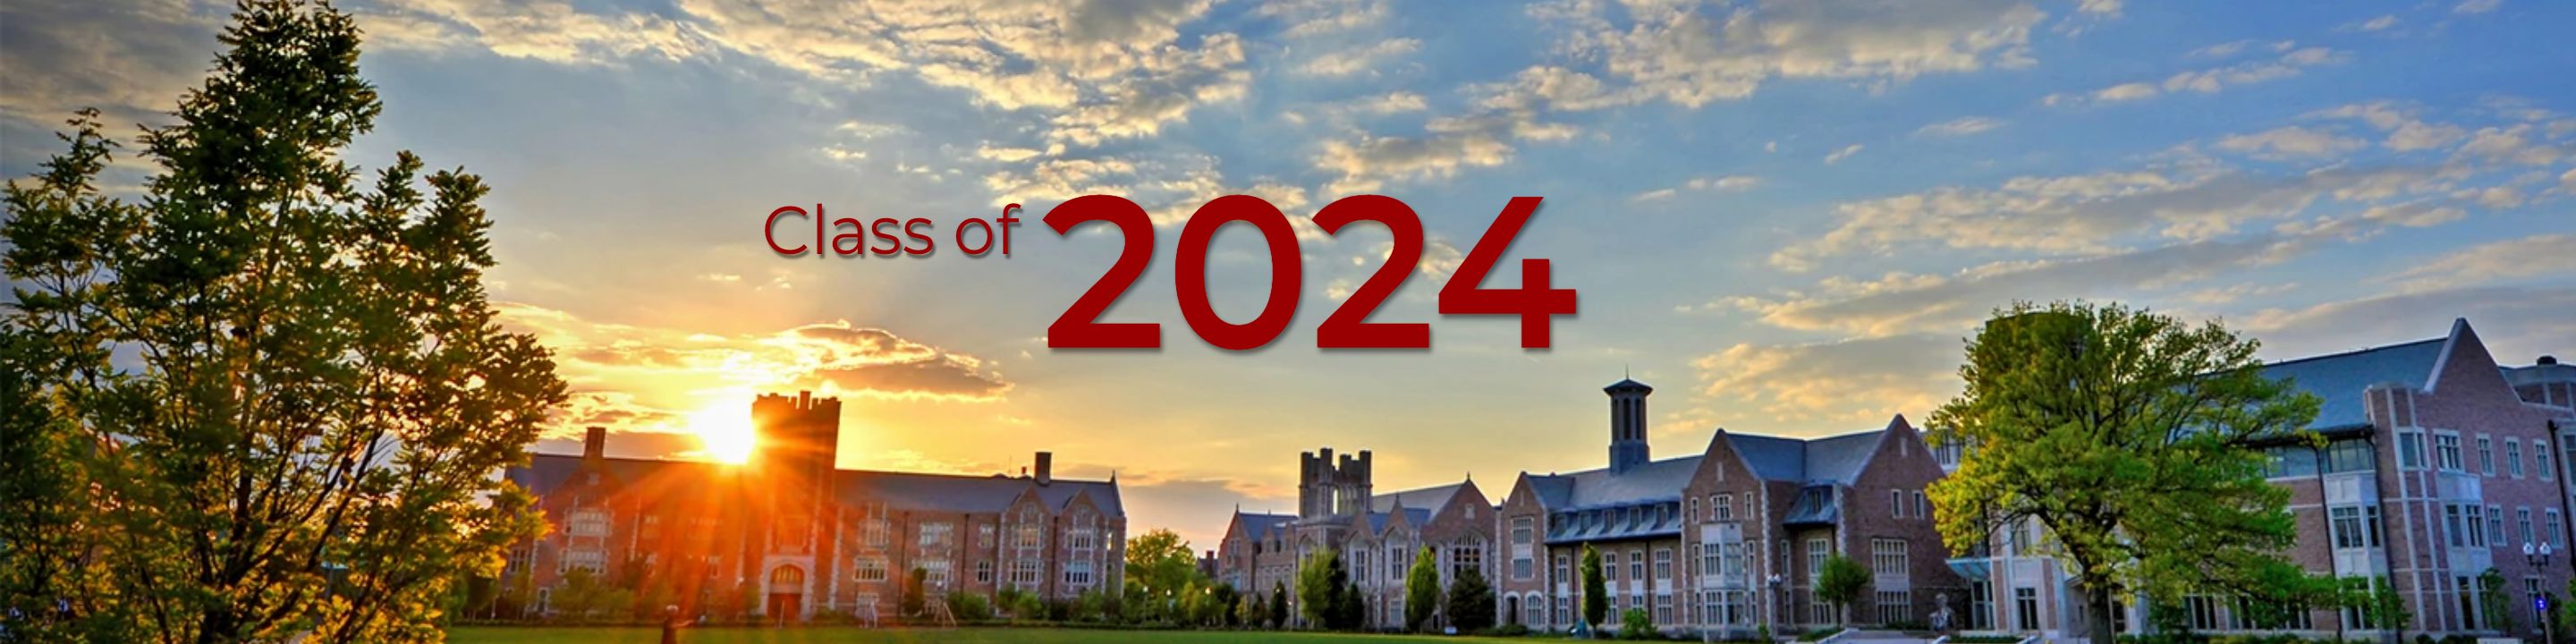 Washington University Class of 2024